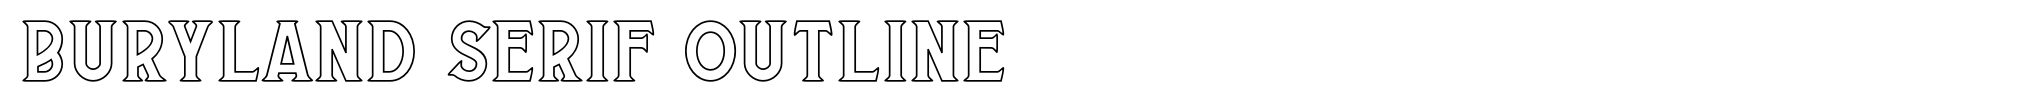 Buryland Serif Outline image